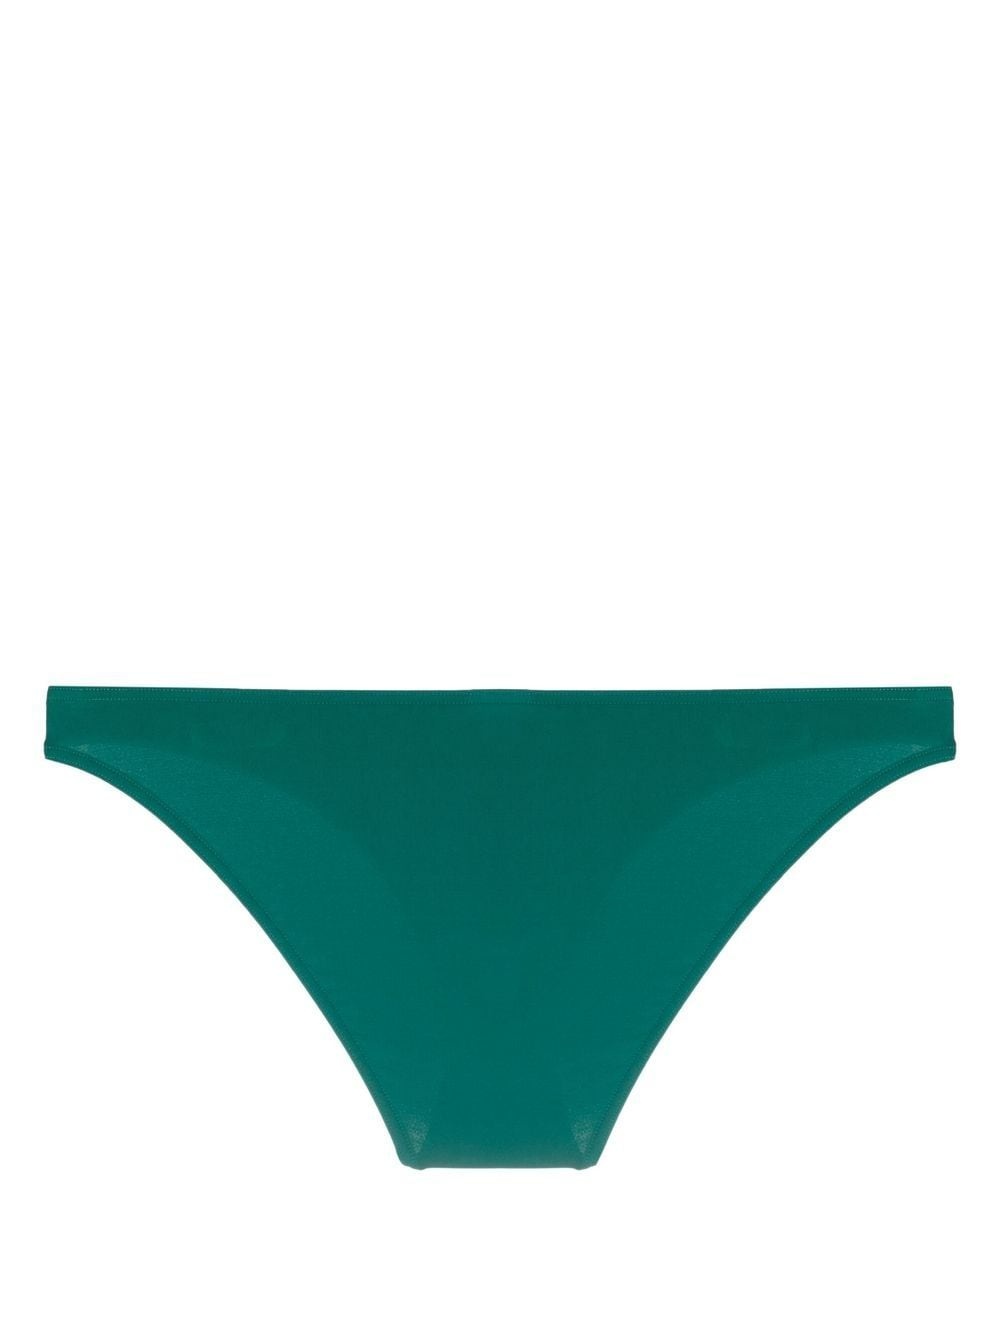 Fripon classic bikini bottoms - 2